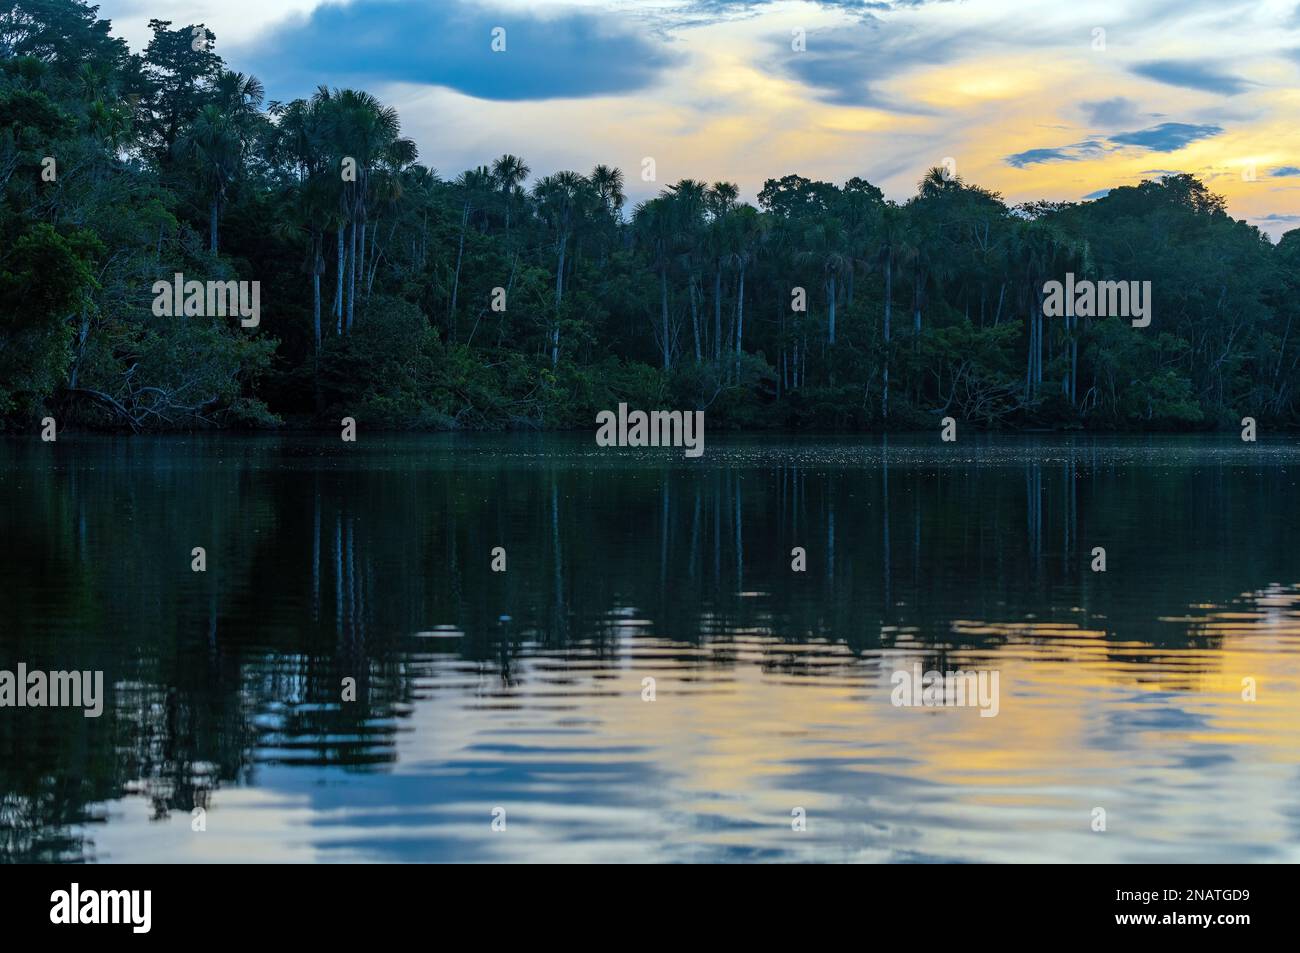 Sonnenuntergang im Amazonas-Regenwald, Yasuni-Nationalpark. Amazonas-Regenwald in Ecuador, Peru, Bolivien, Brasilien, Kolumbien, Surinam, (Französisch) Guyana. Stockfoto